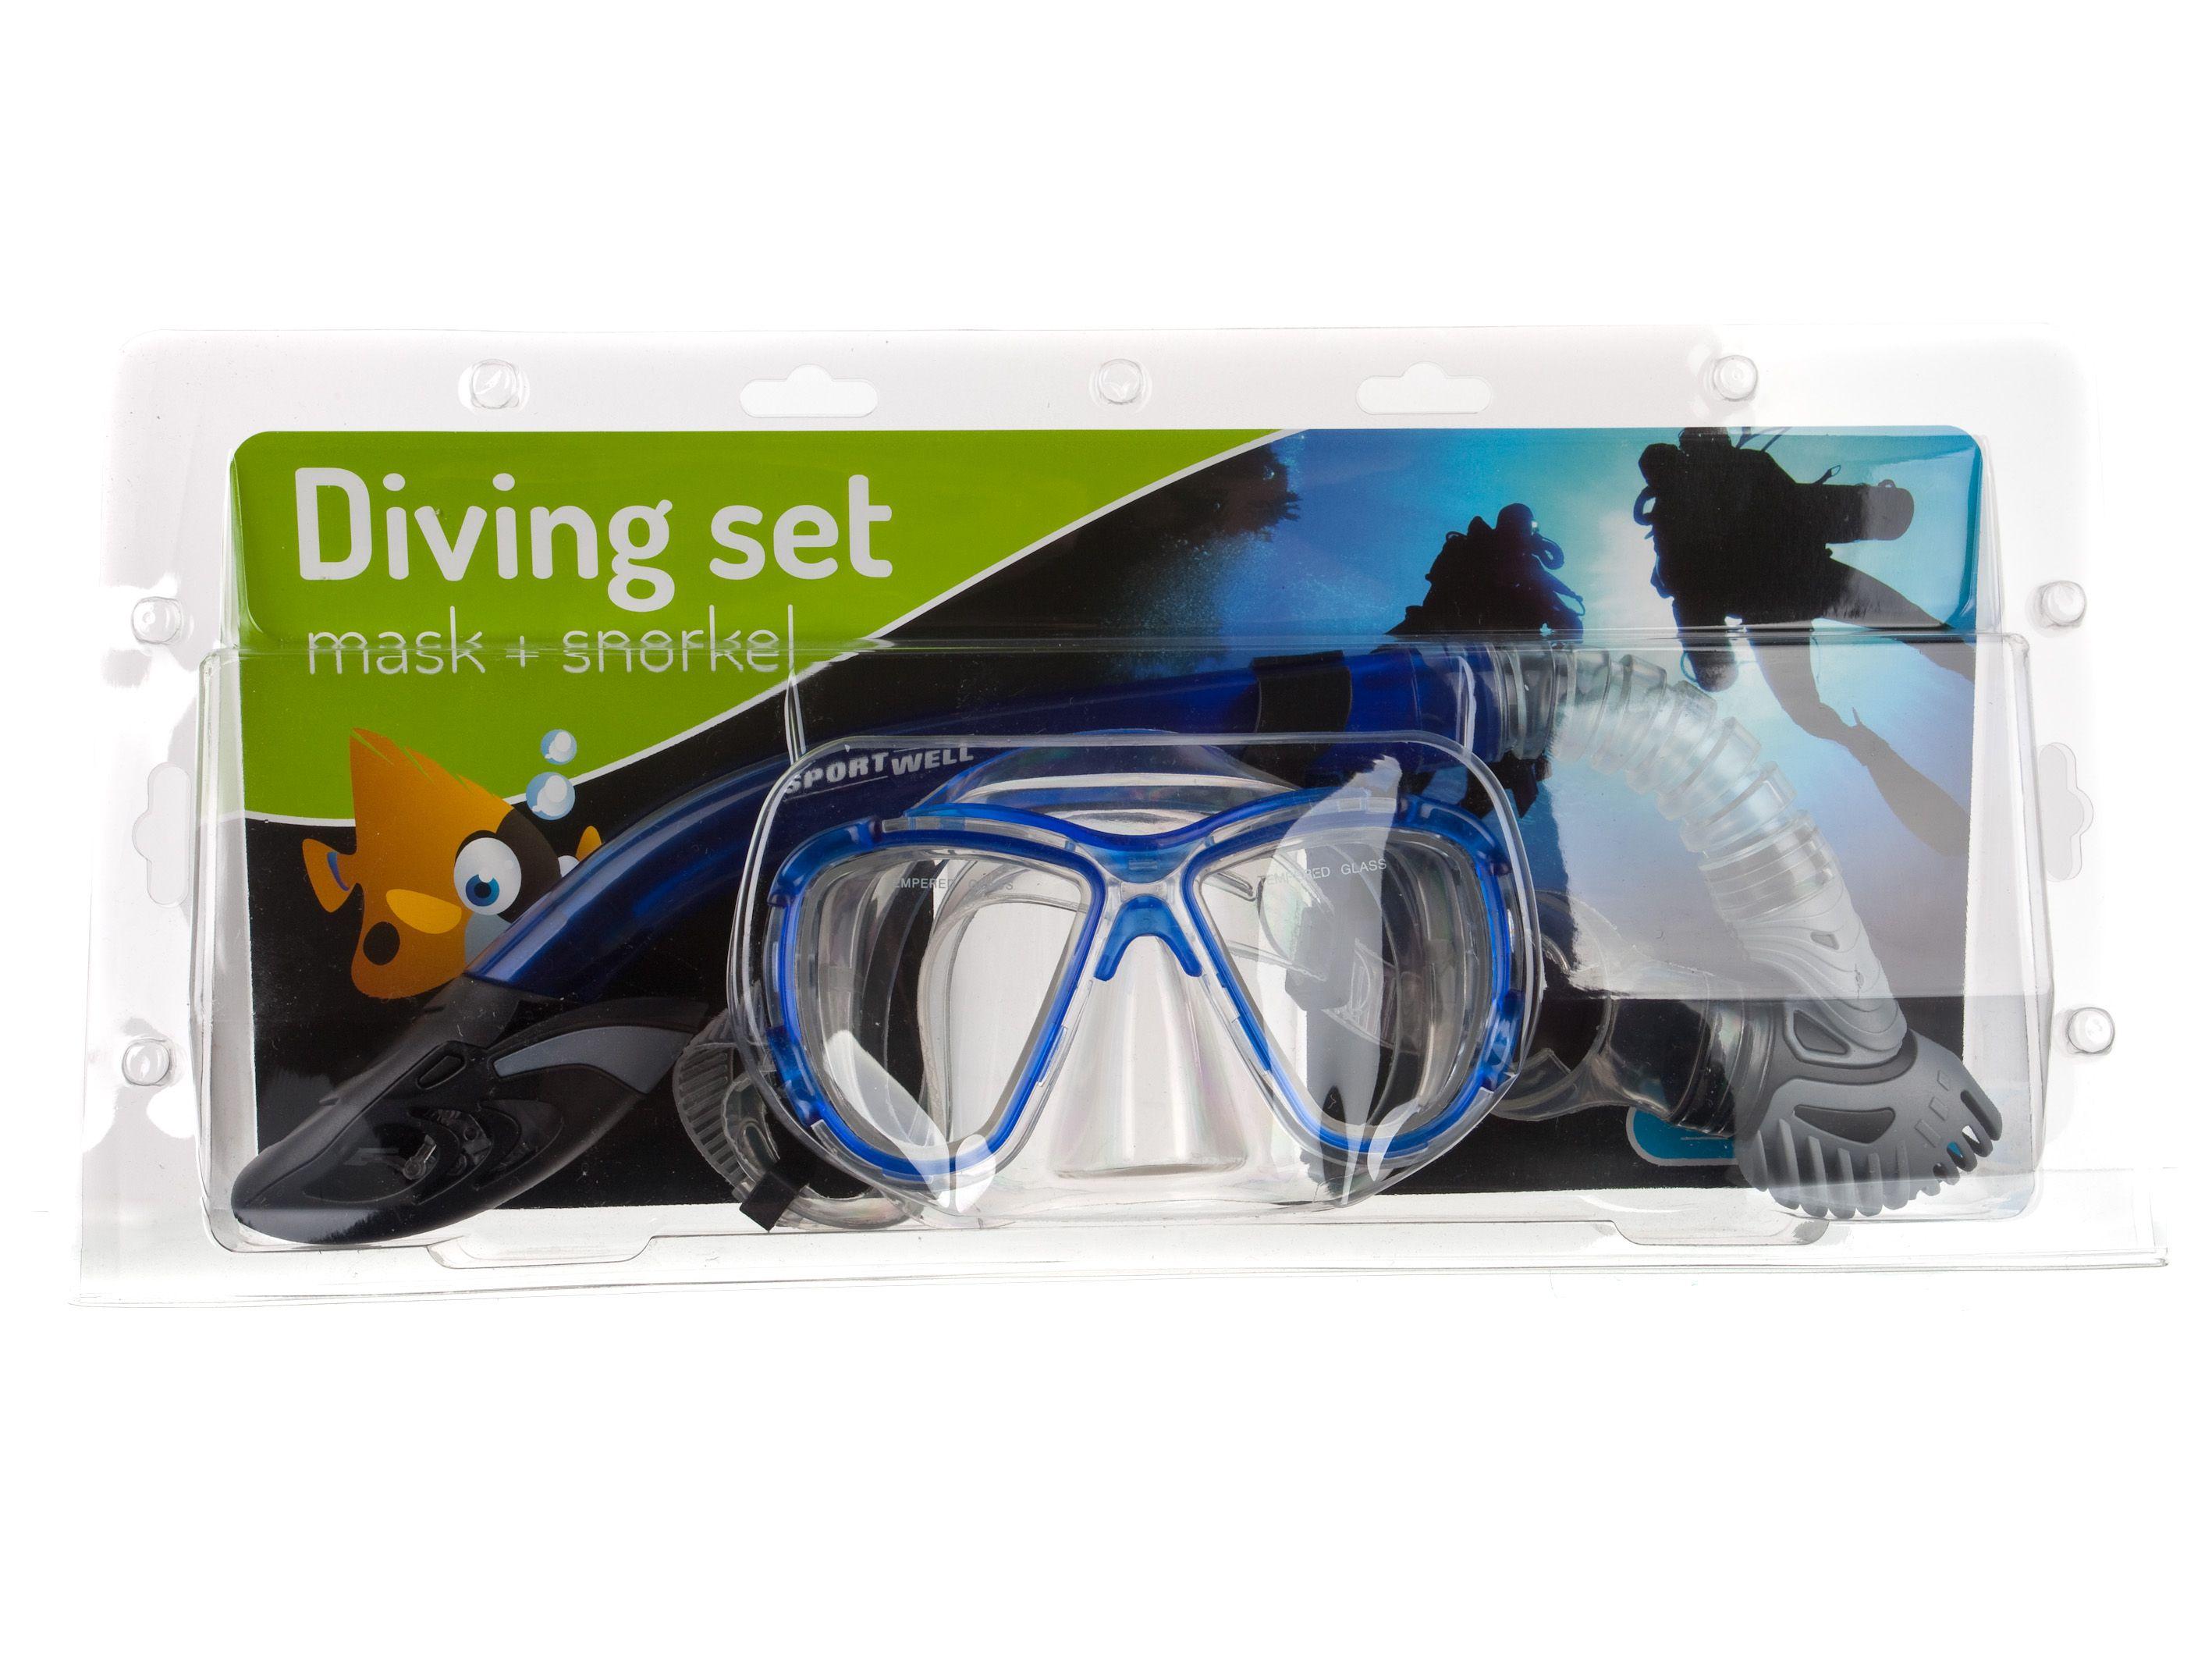 Senior SportWell diving set, material: TPR, tempered glass, split